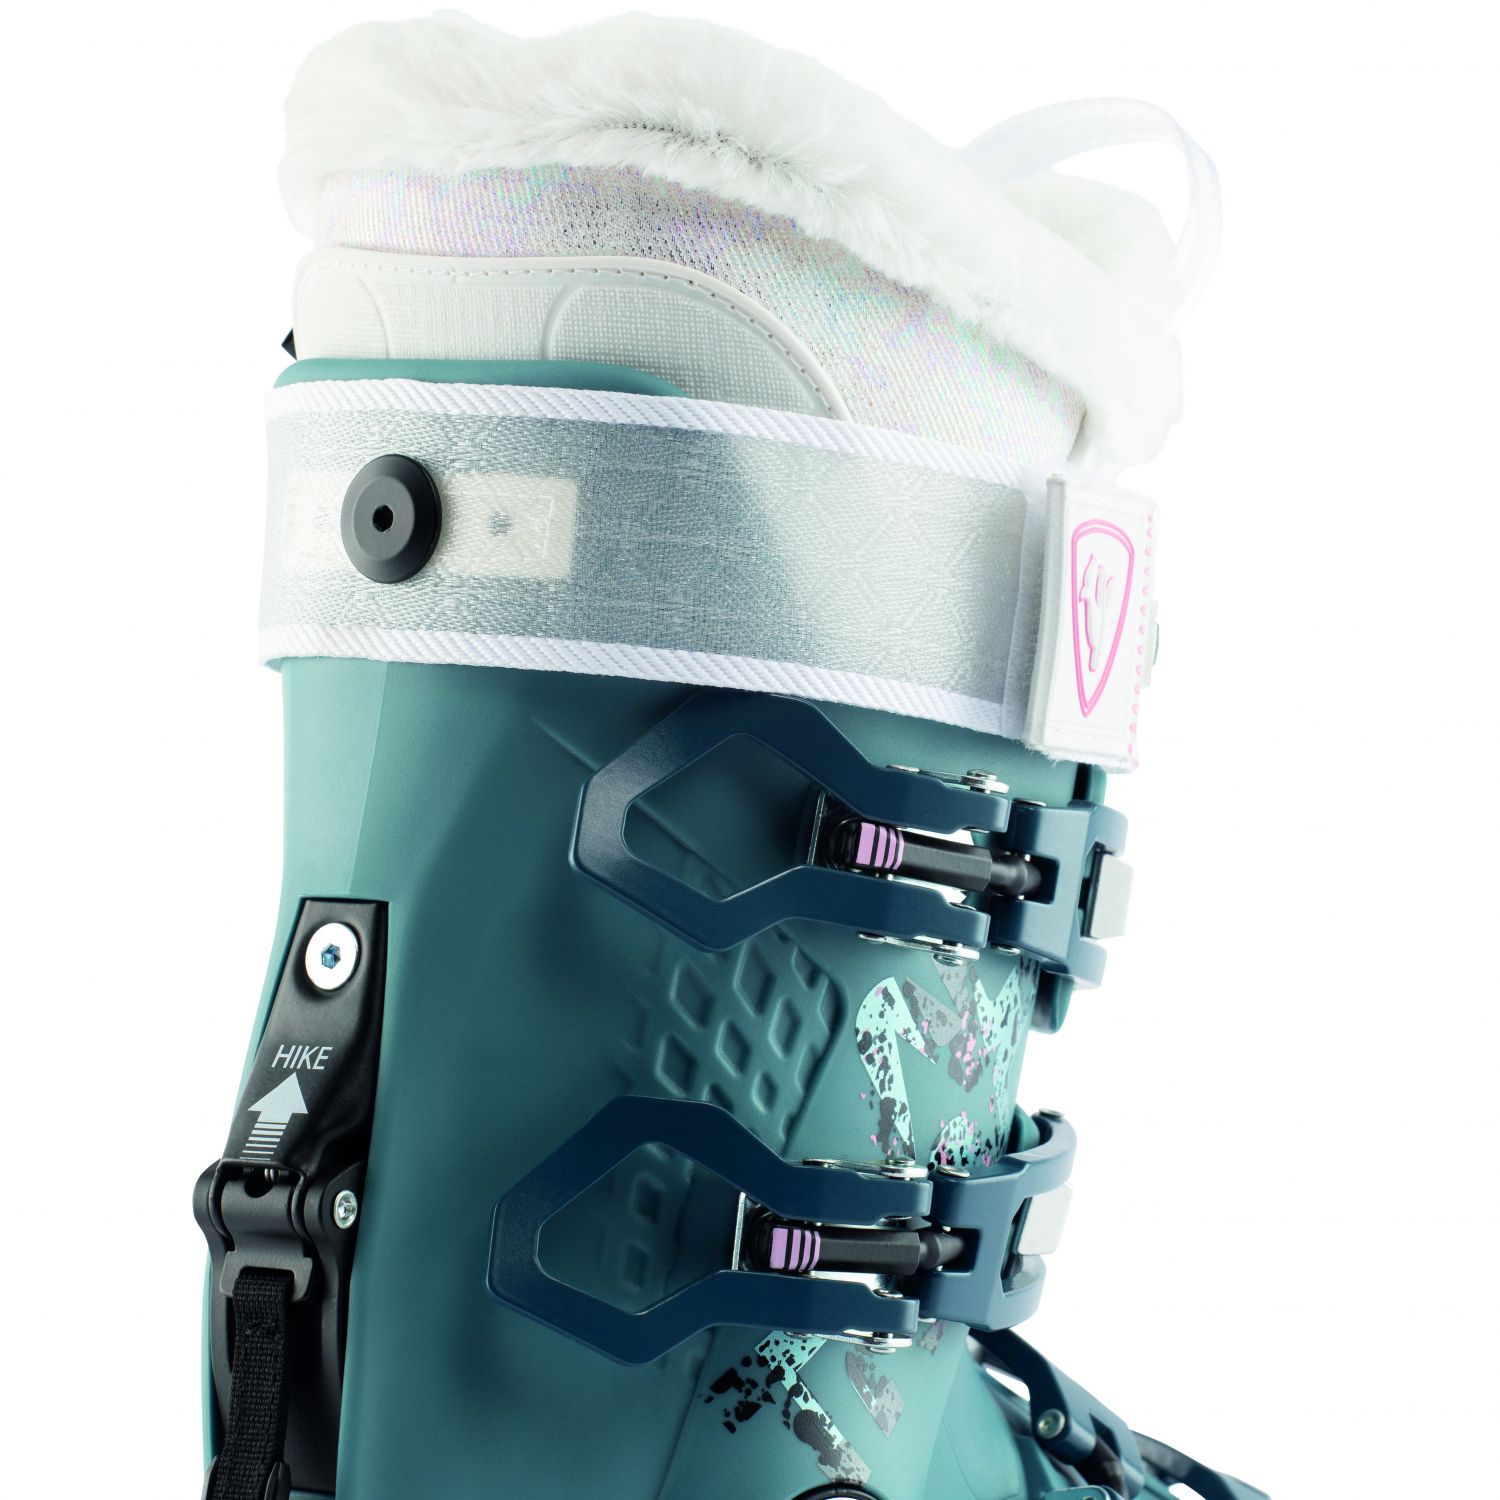 Rossignol Alltrack 80, ski boots, women, blue